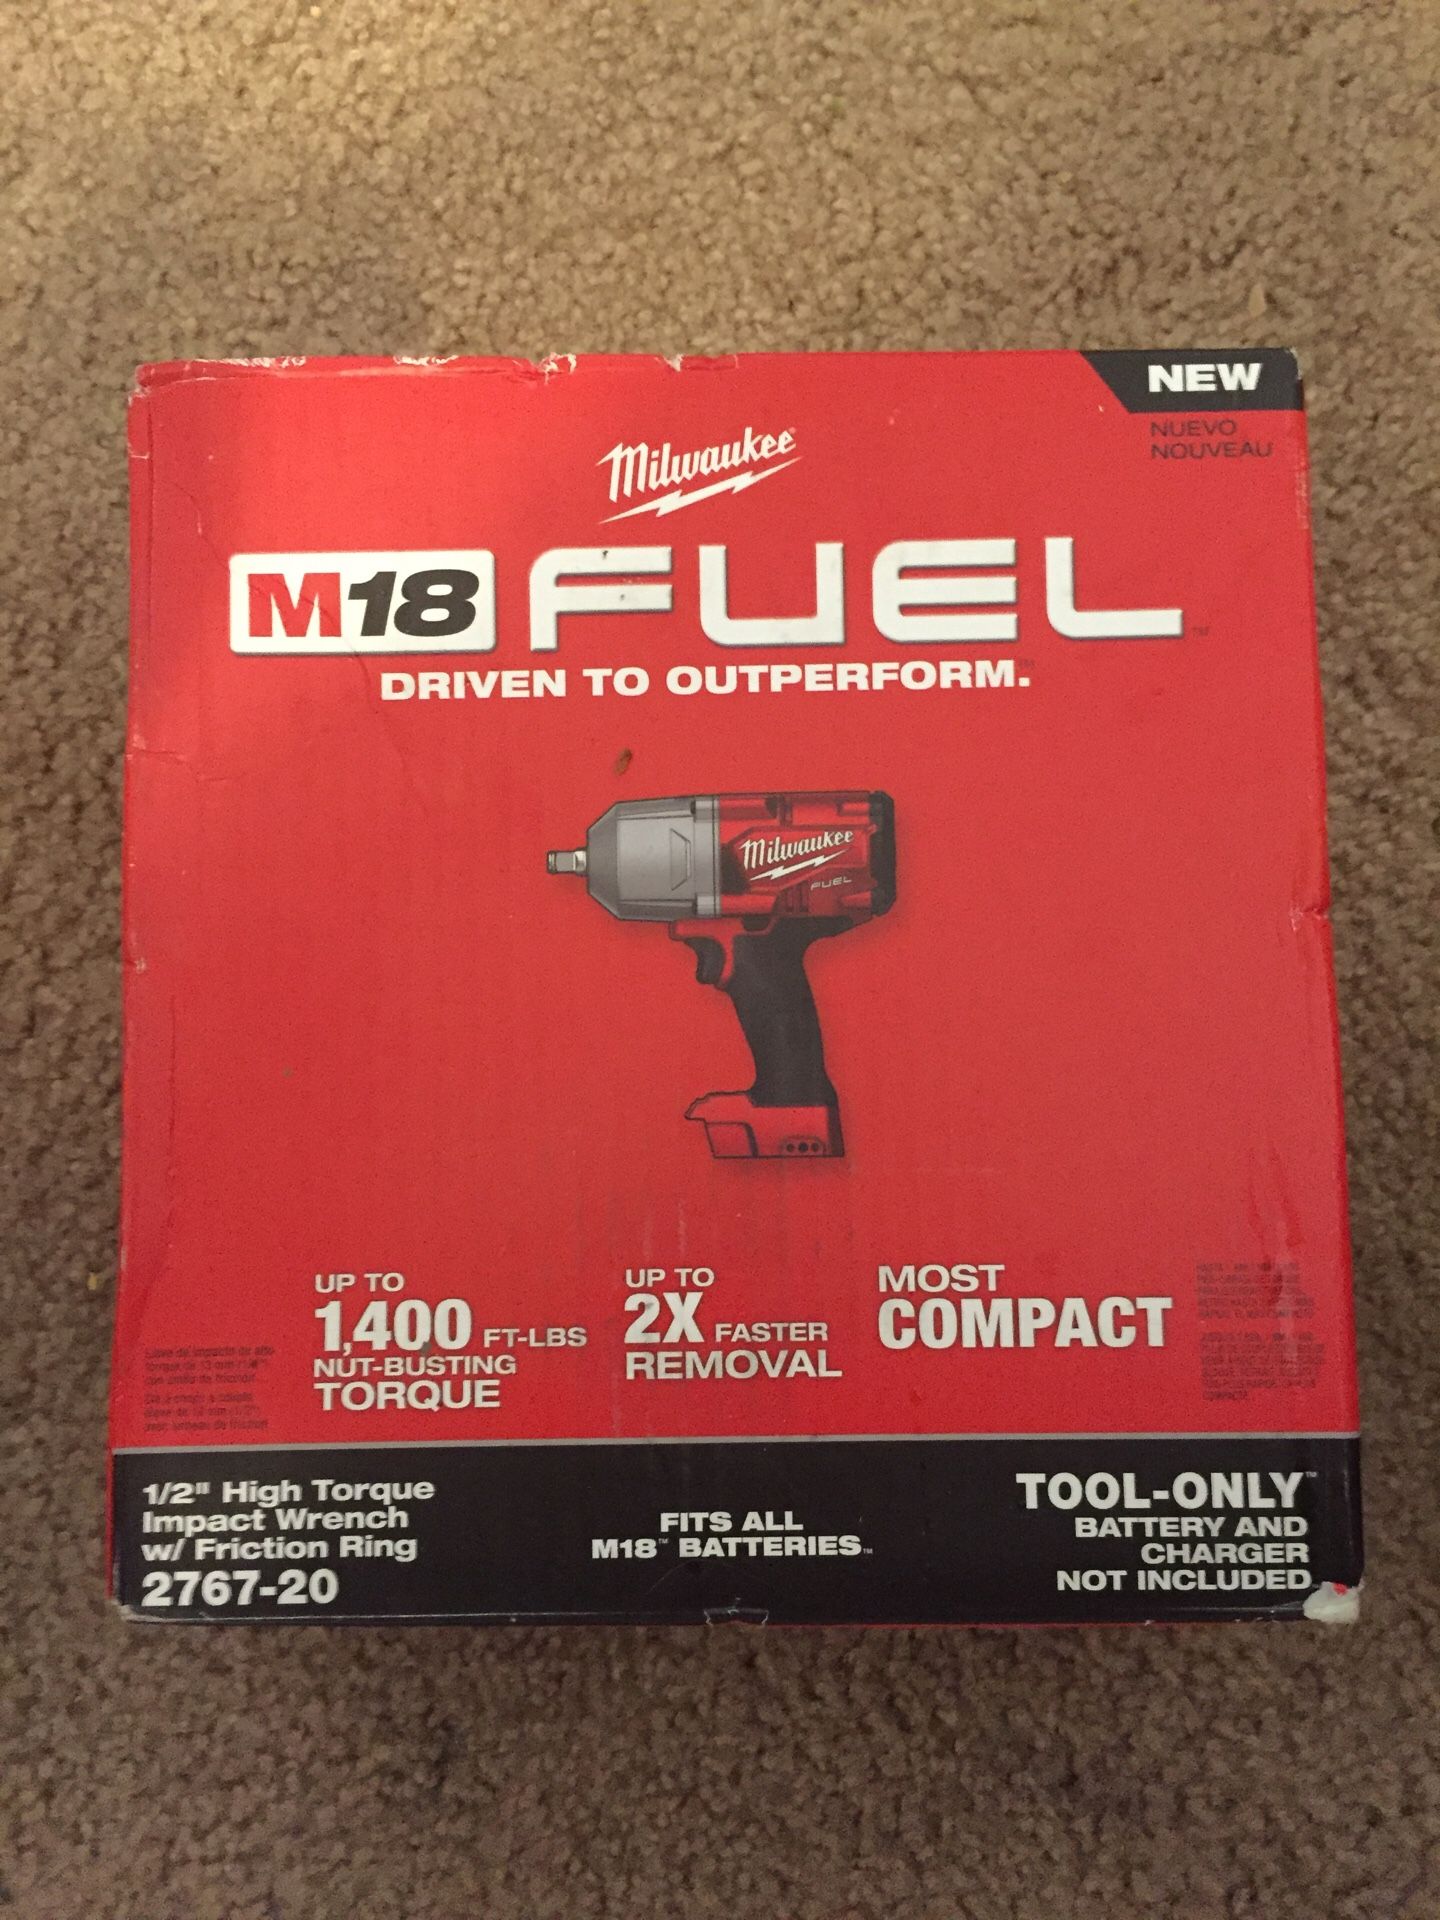 Milwaukee m18 fuel 1/2 high torque impact wrench 2767-20 brand new ! $$220$$